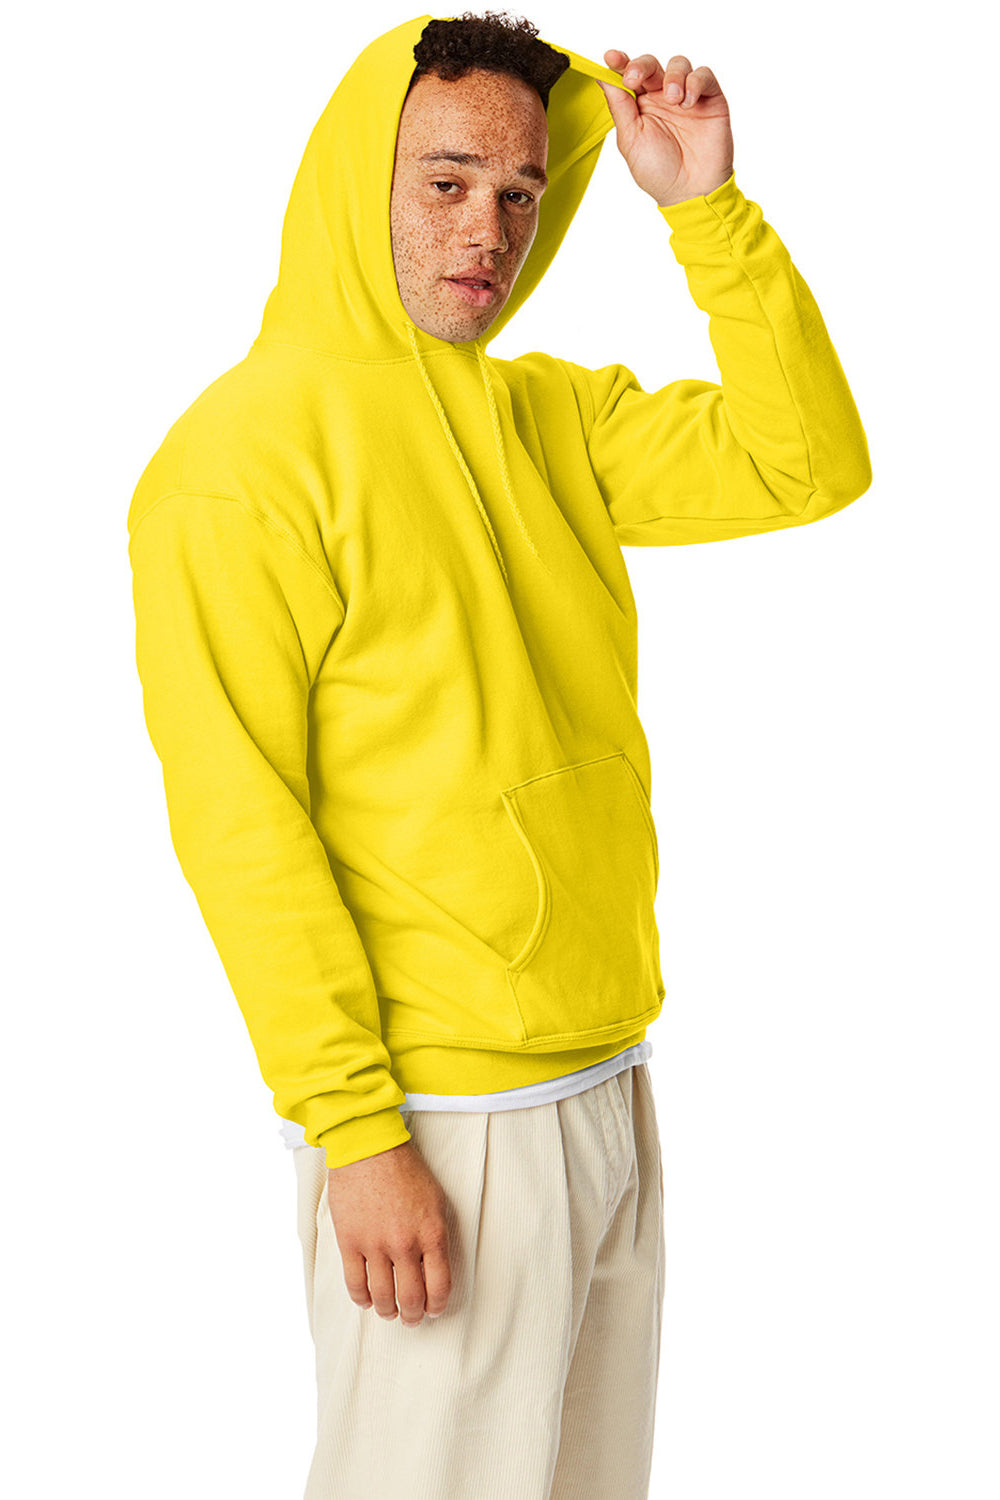 Hanes P170 Mens EcoSmart Print Pro XP Hooded Sweatshirt Hoodie Athletic Yellow SIde